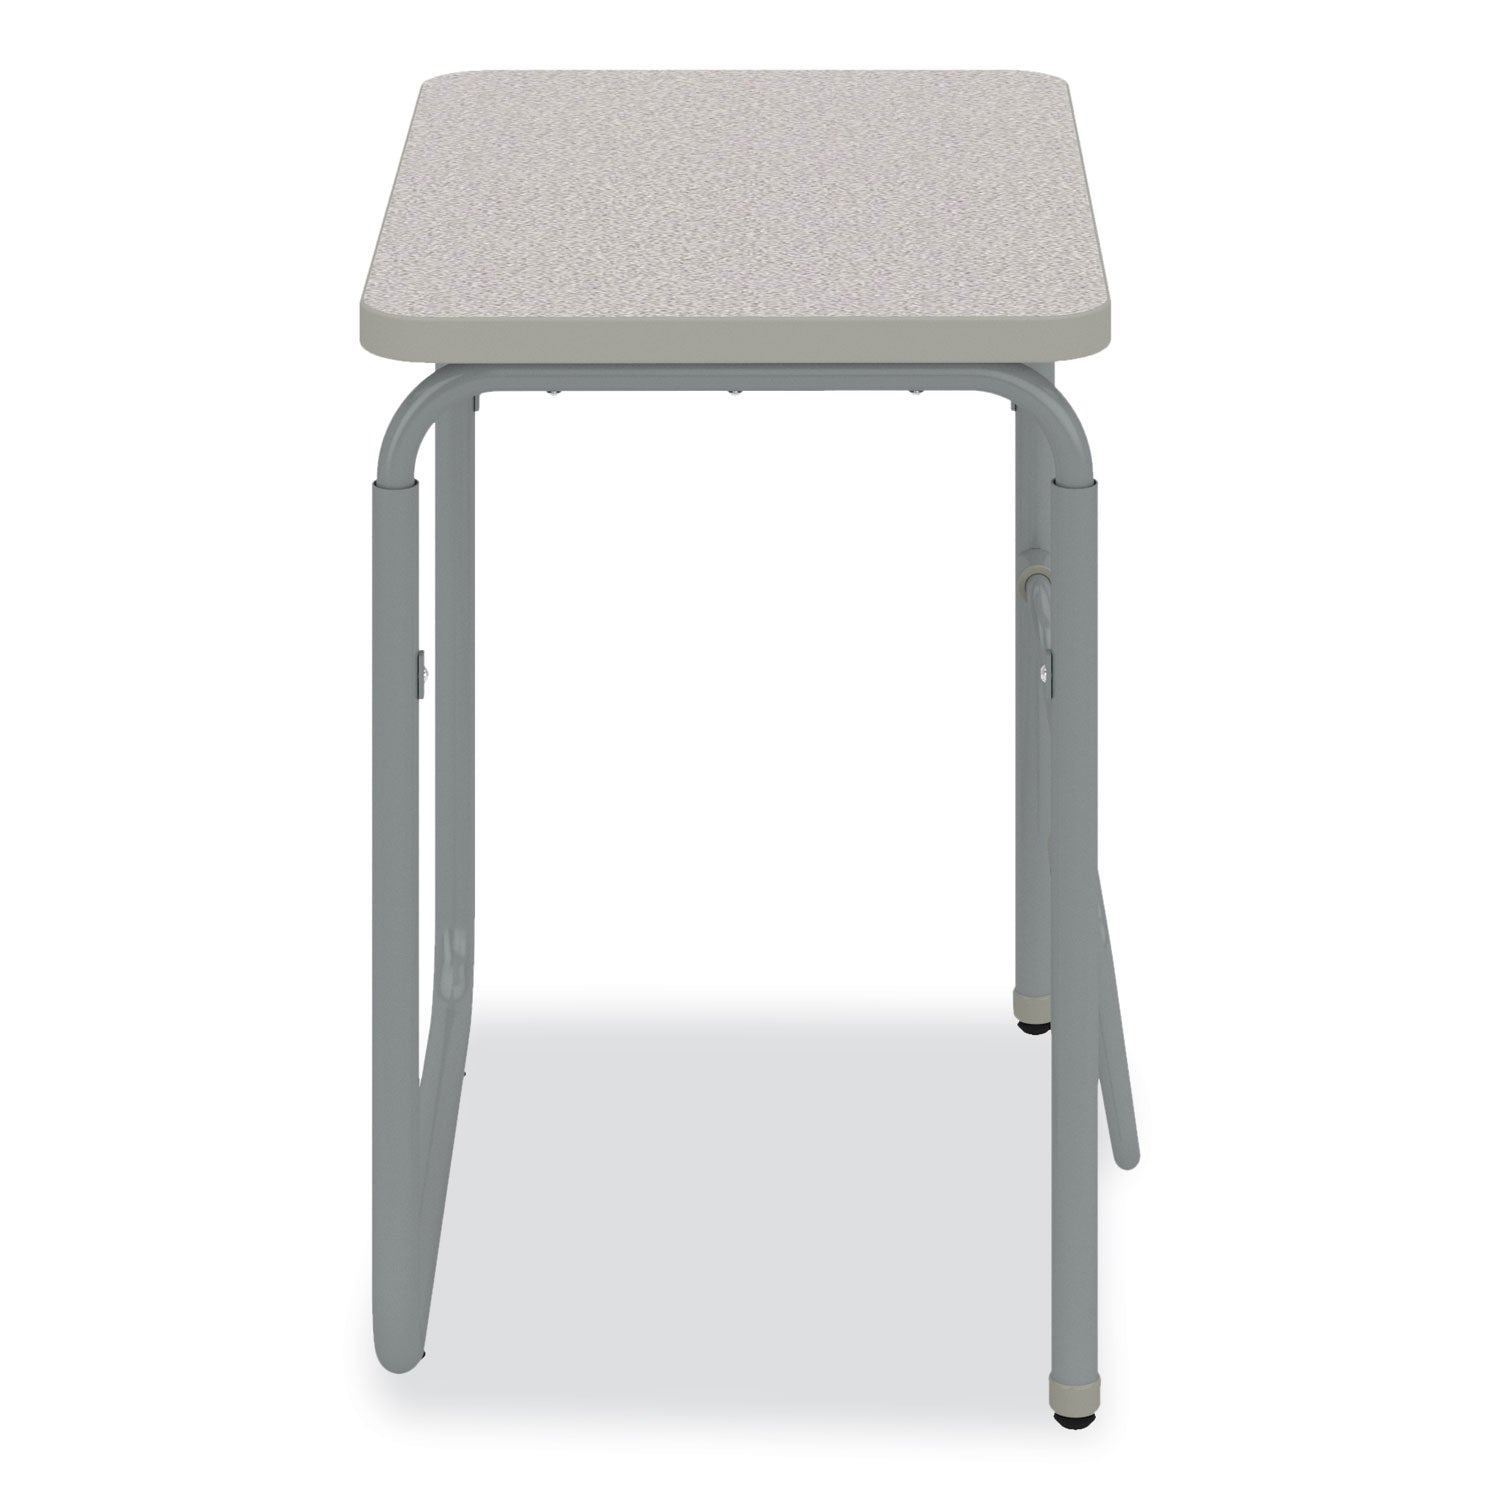 alphabetter-20-height-adjustable-student-desk-with-pendulum-bar-2775-x-1975-x-29-to-43-pebble-gray_saf1223gr - 5